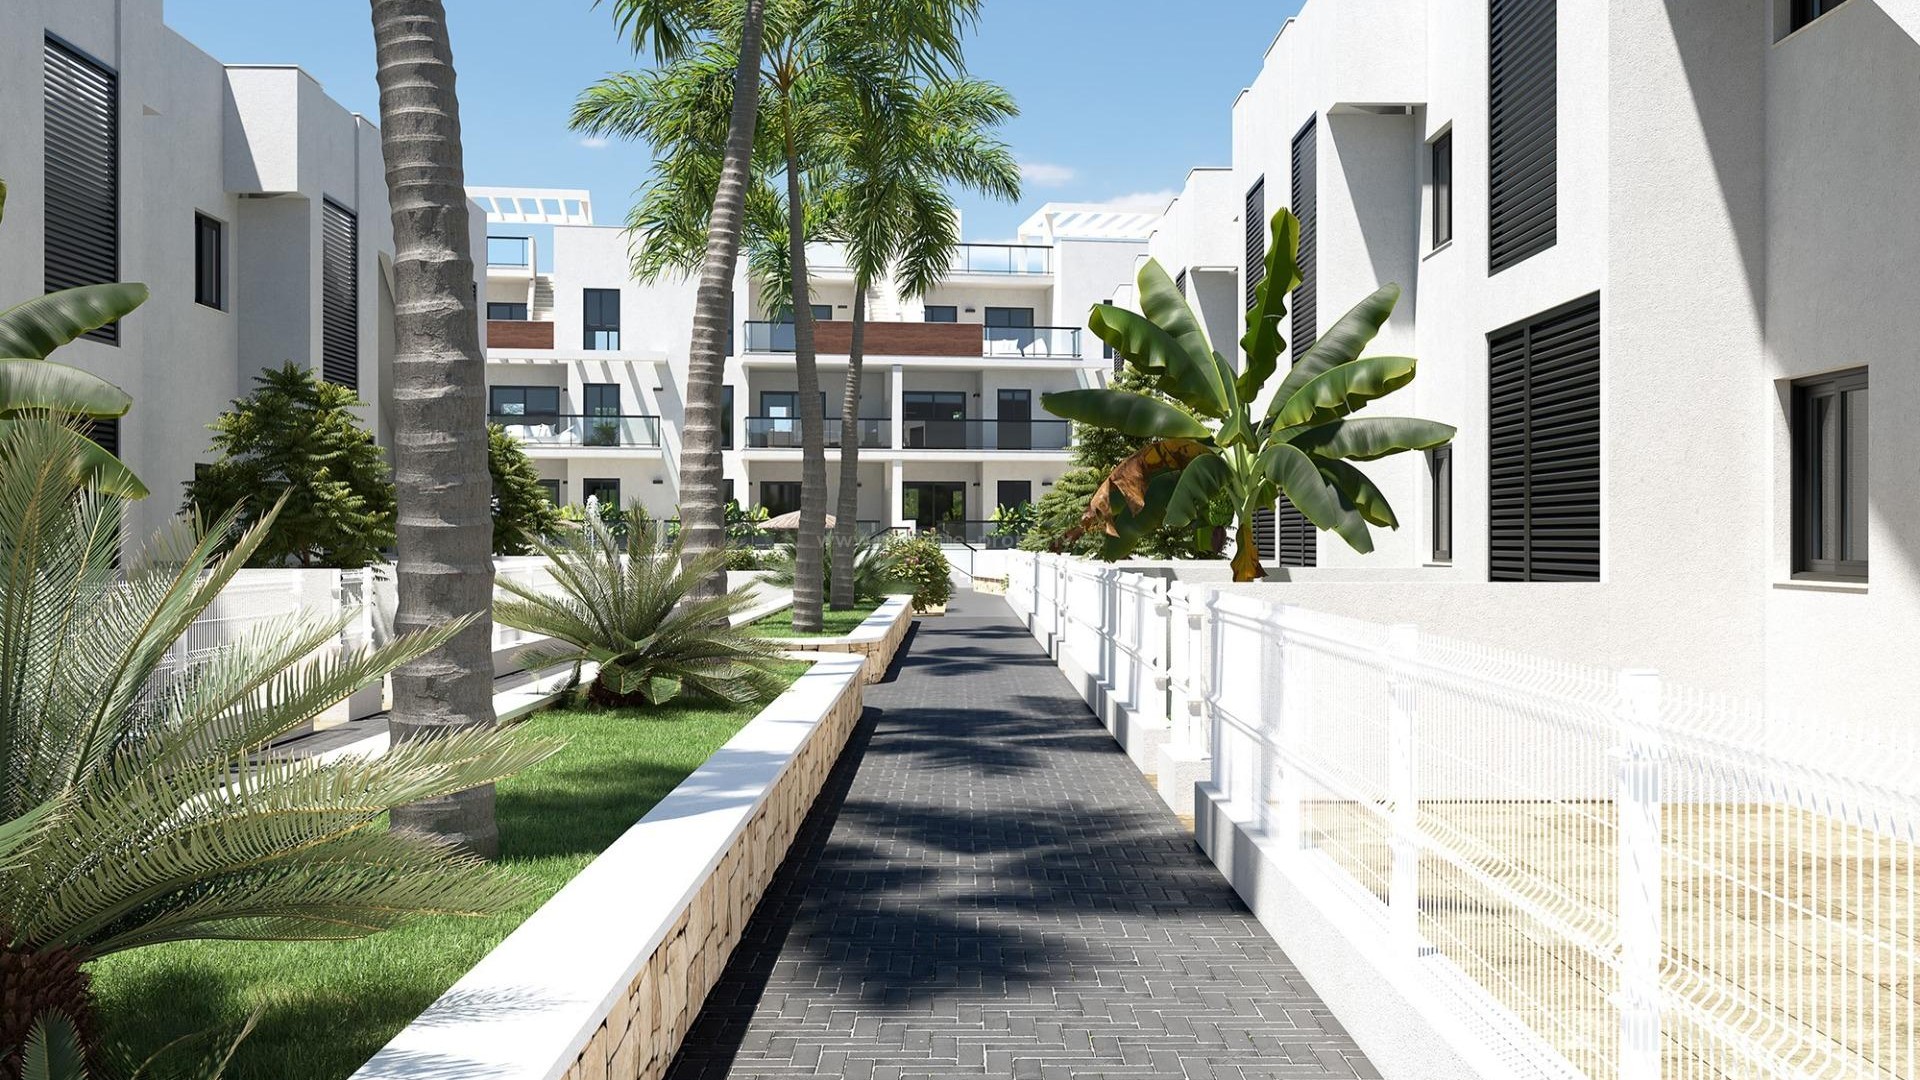 Bungalows/apartments in Torre de La Horadada, 300m from the beach, 2/3 bedrooms, 2 bathrooms, ground floor with private garden, top floor with private solarium